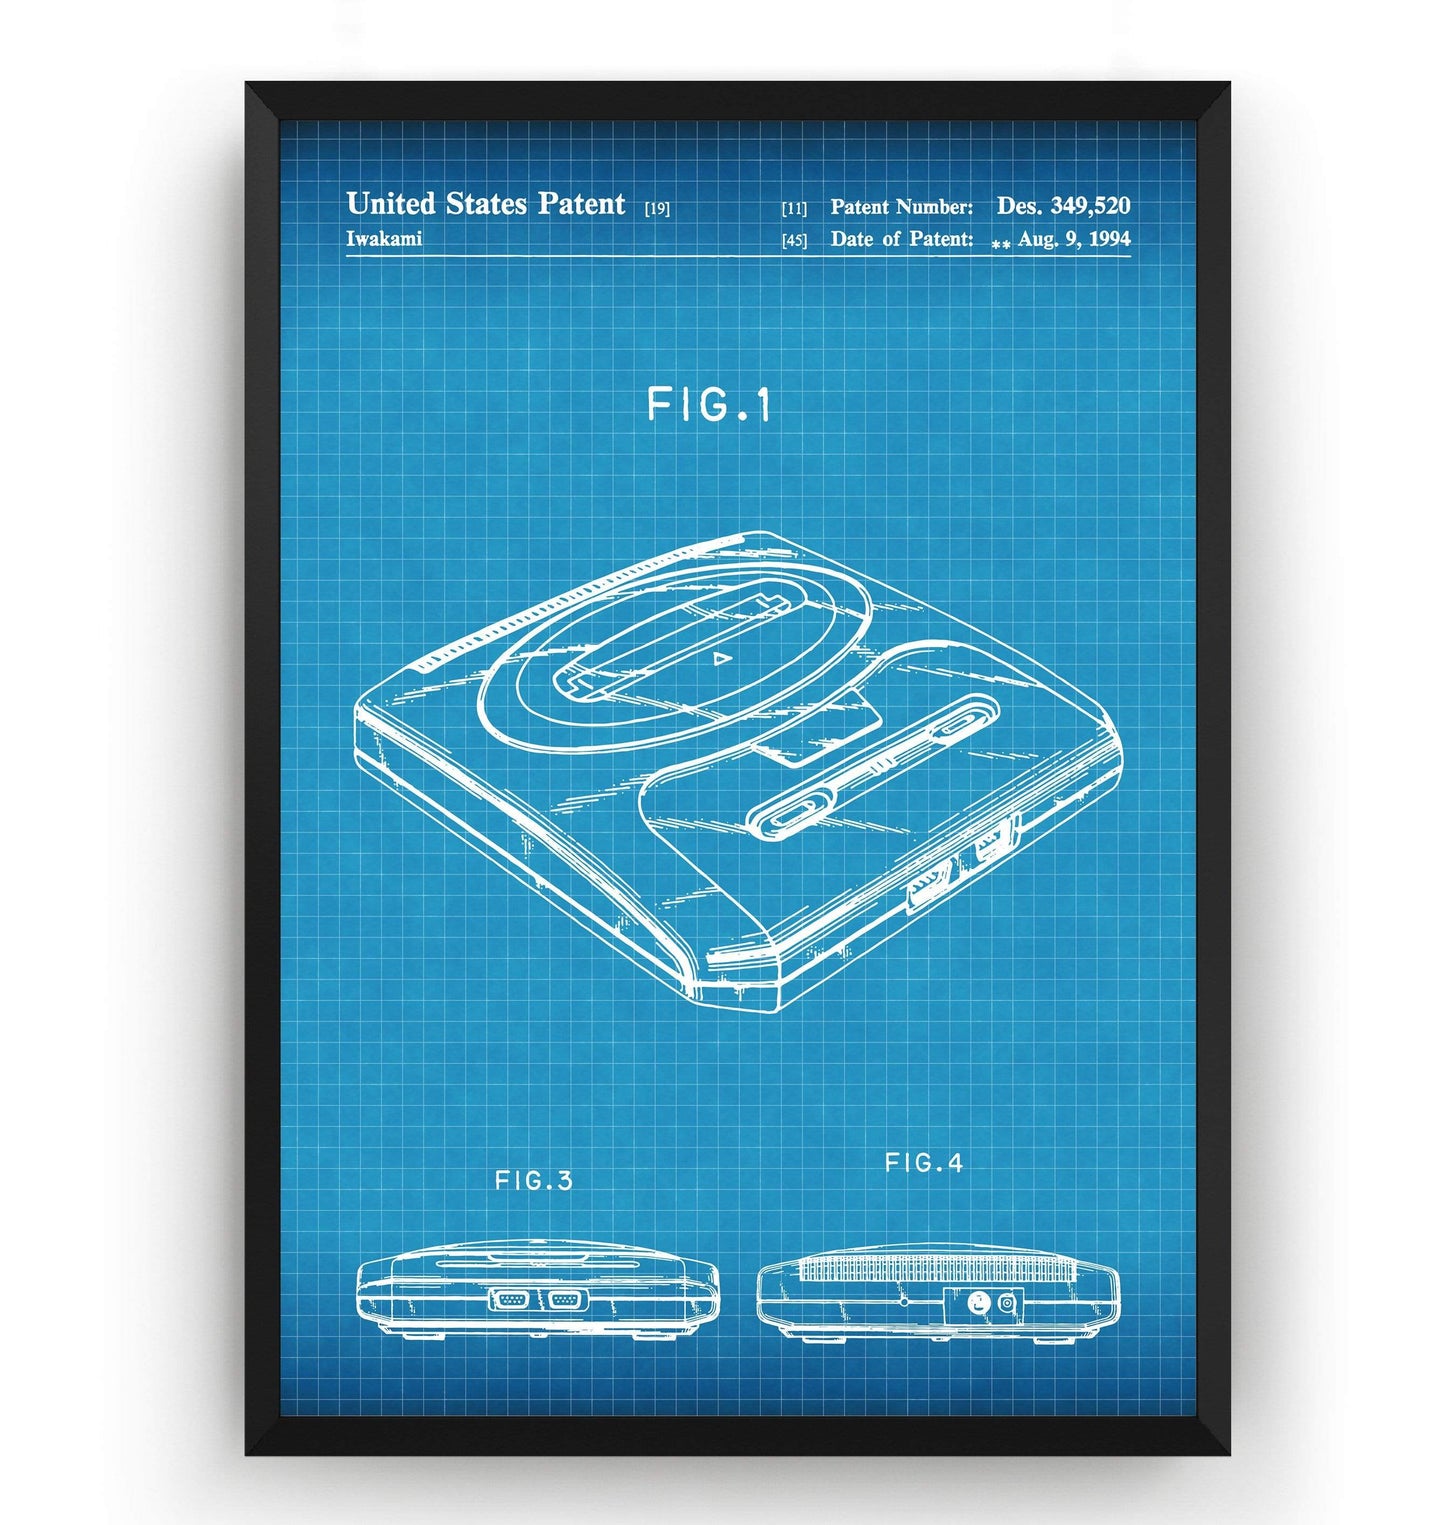 Mega Drive Patent Print - Magic Posters